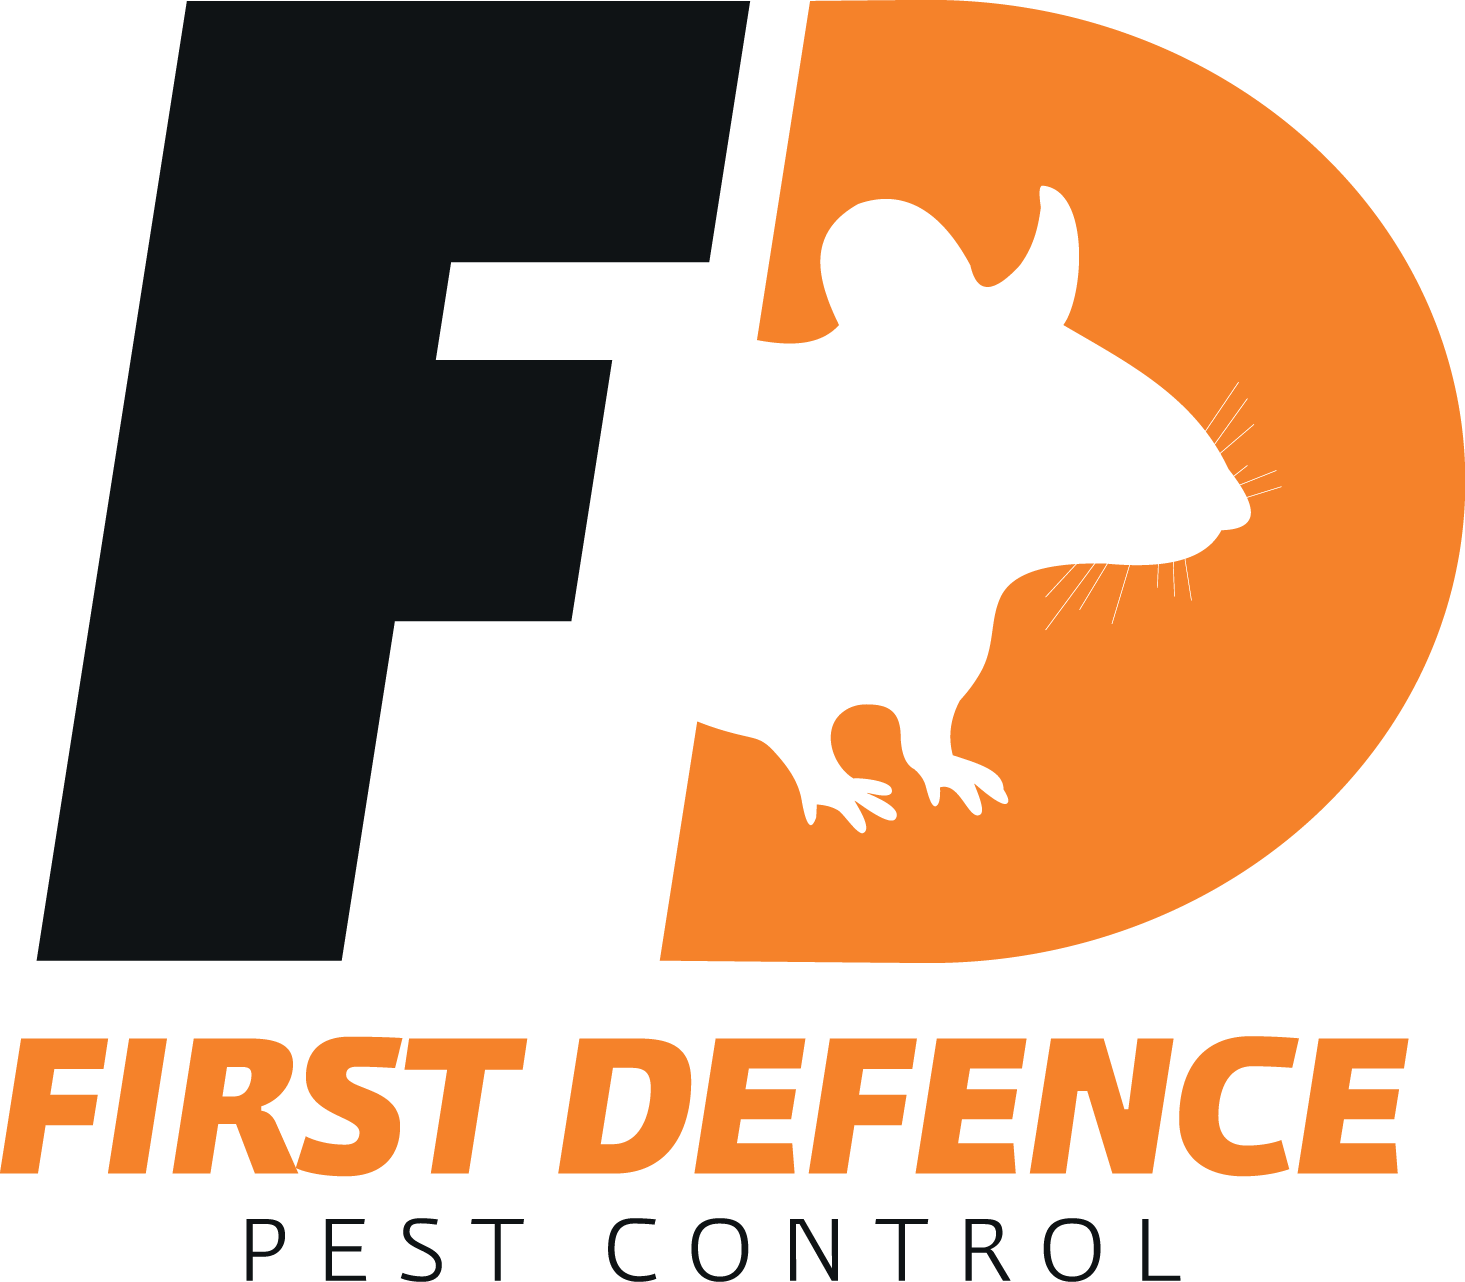 First Defence Pest Control - Pest Control Logos (1465x1282)